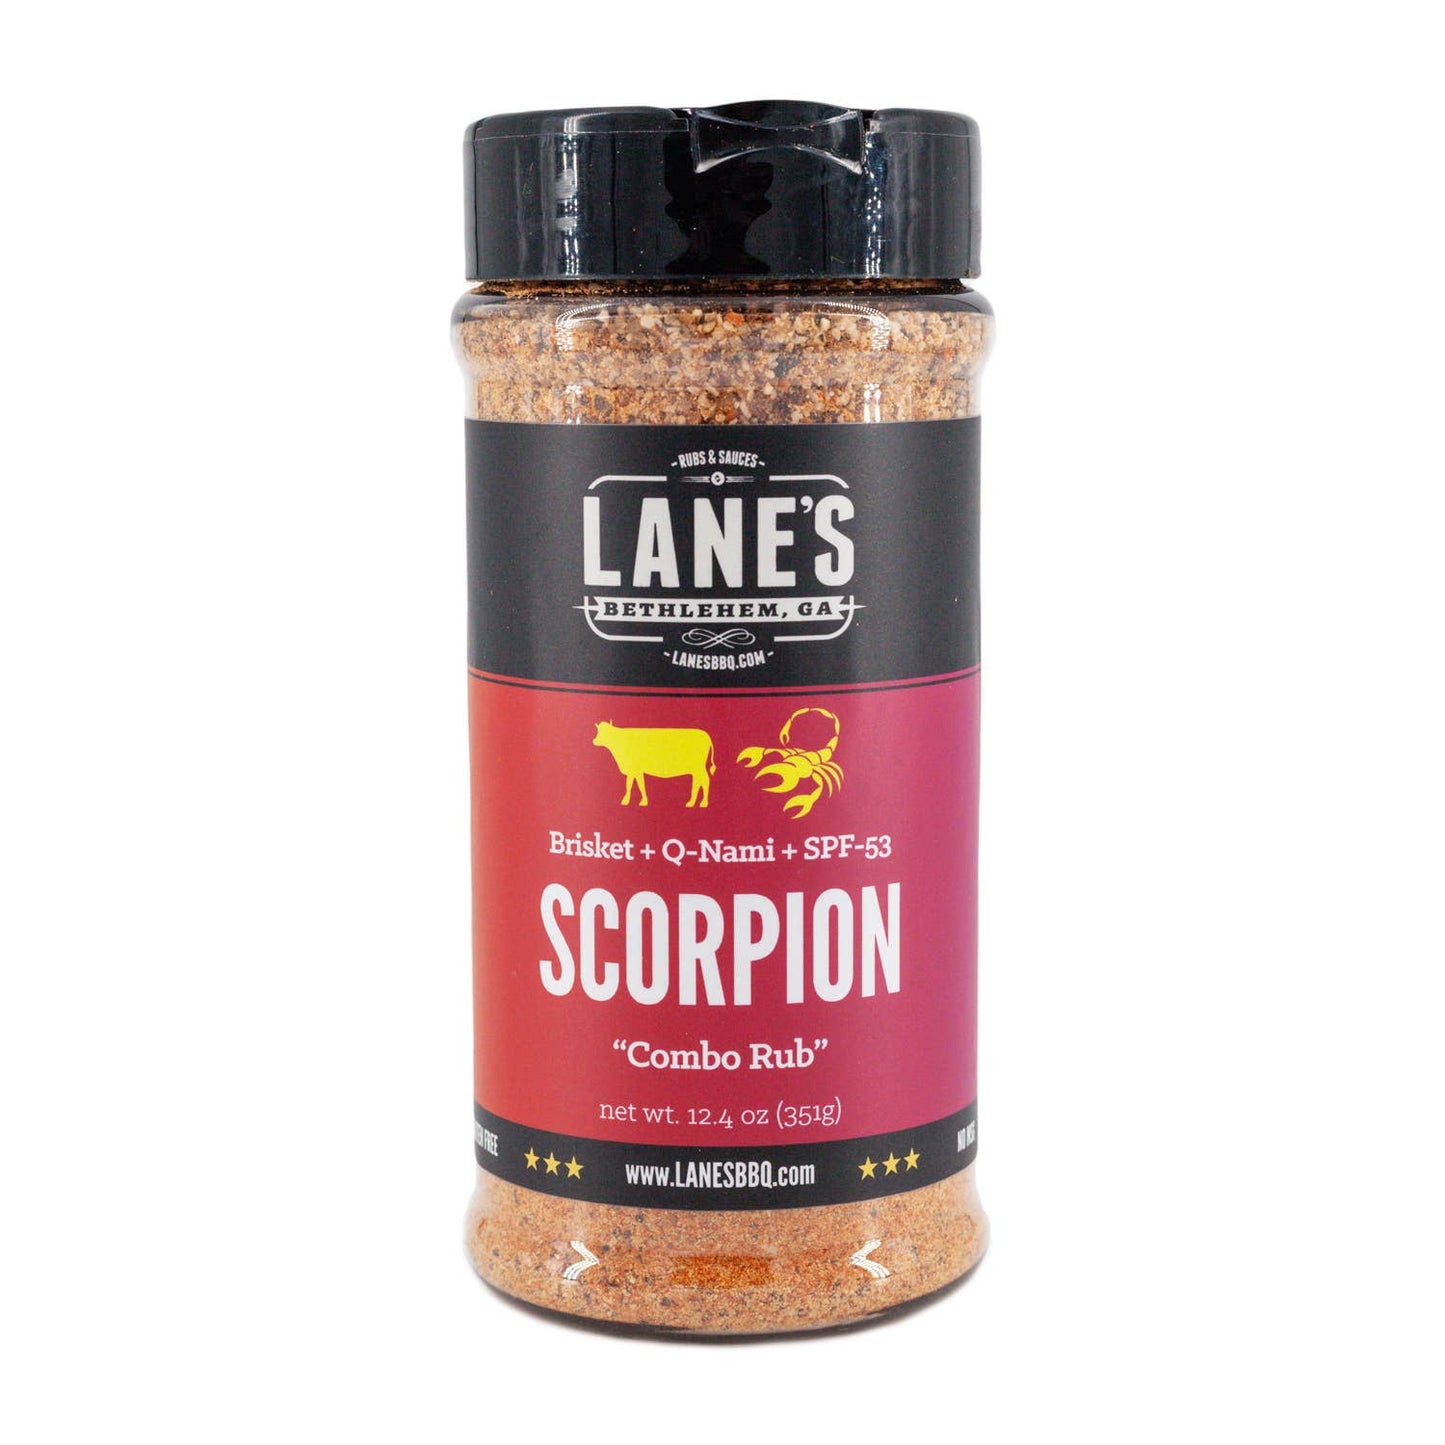 Lane's BBQ - Scorpion Rub